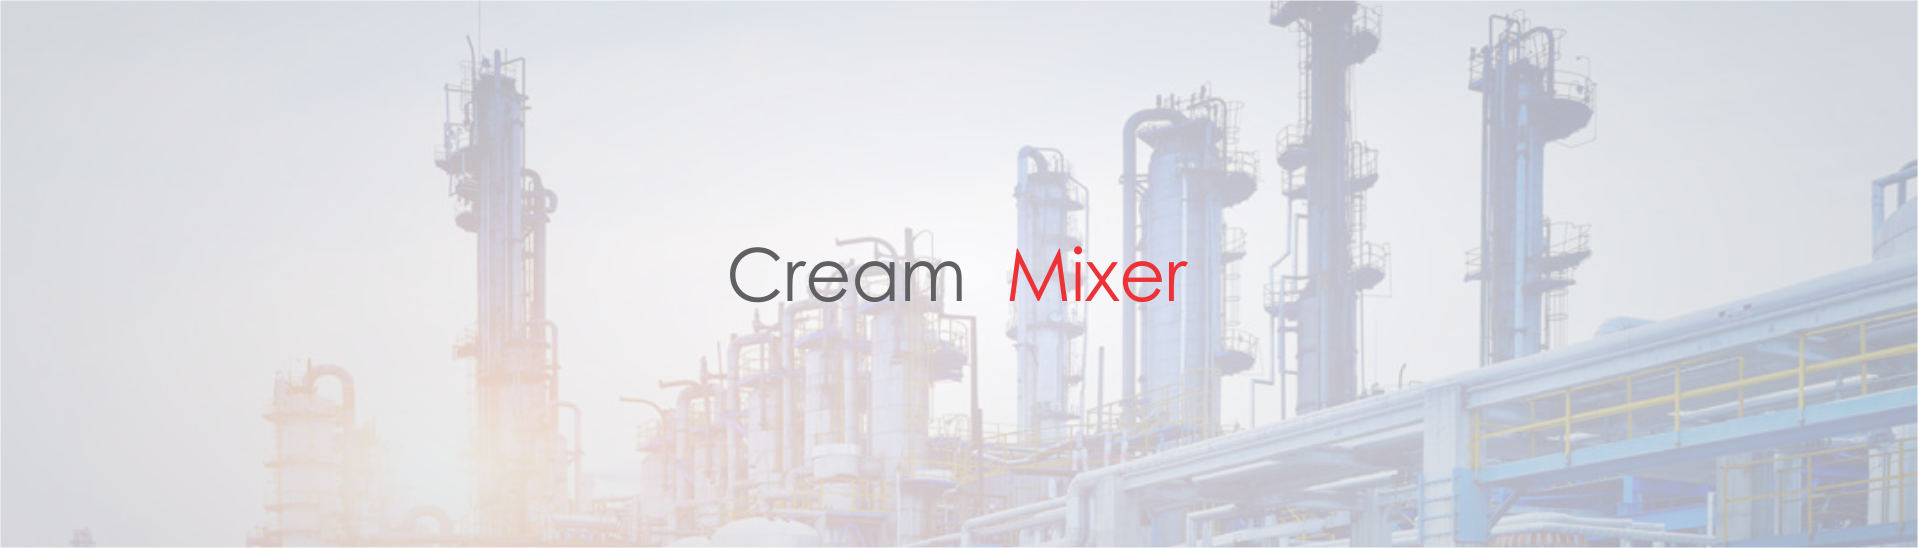 Cream Mixer